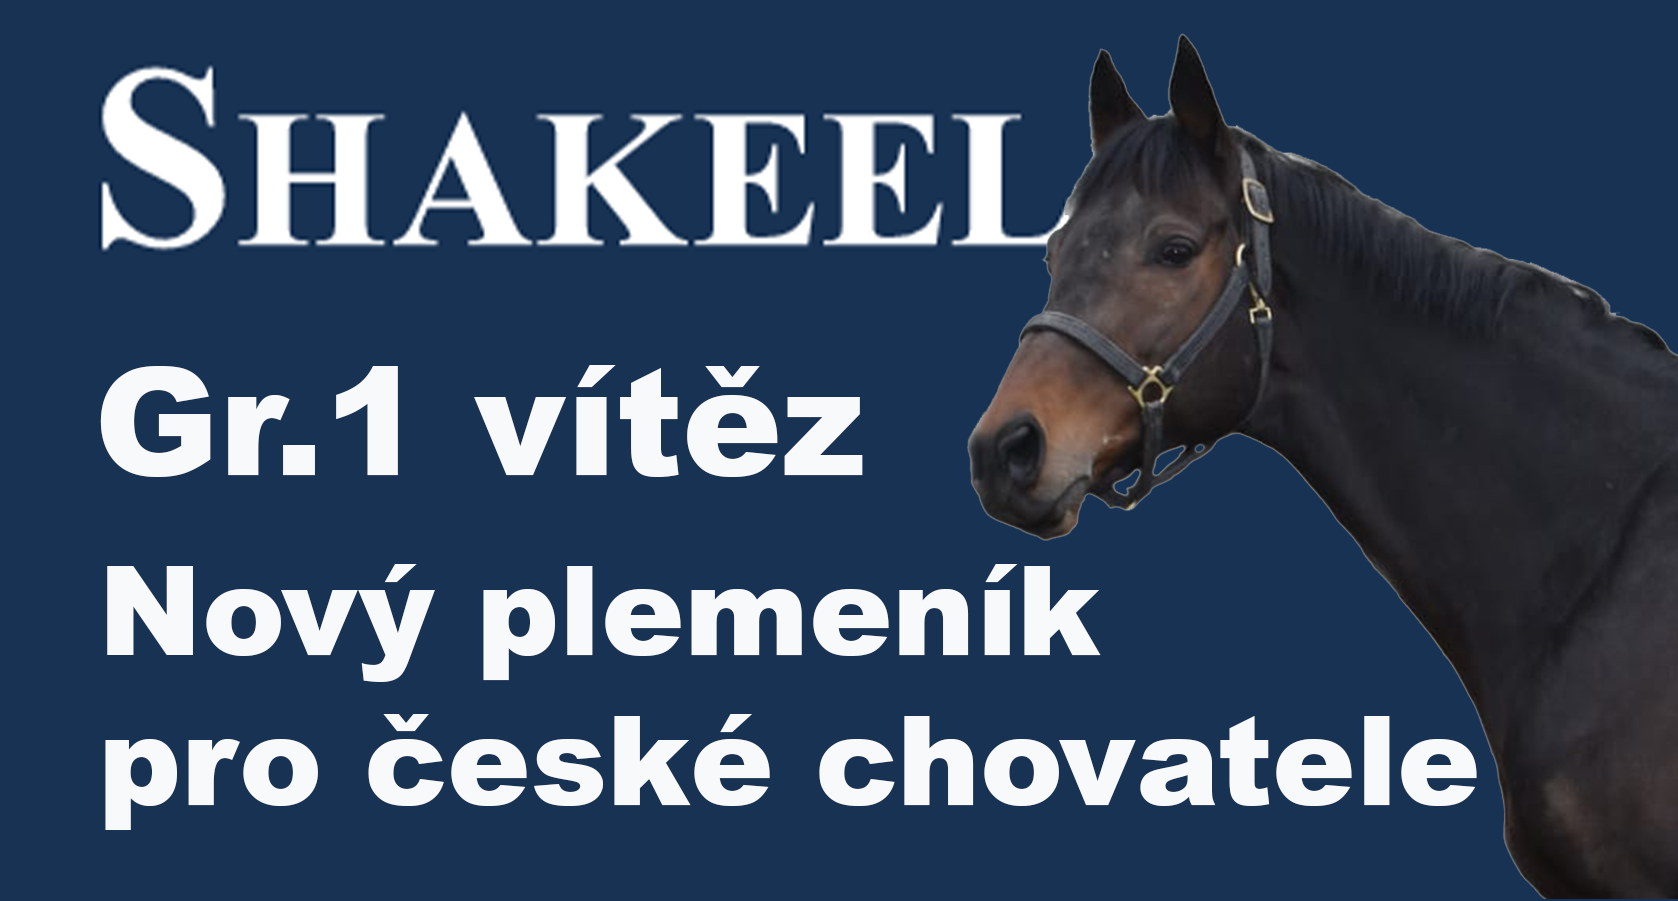 shakeel